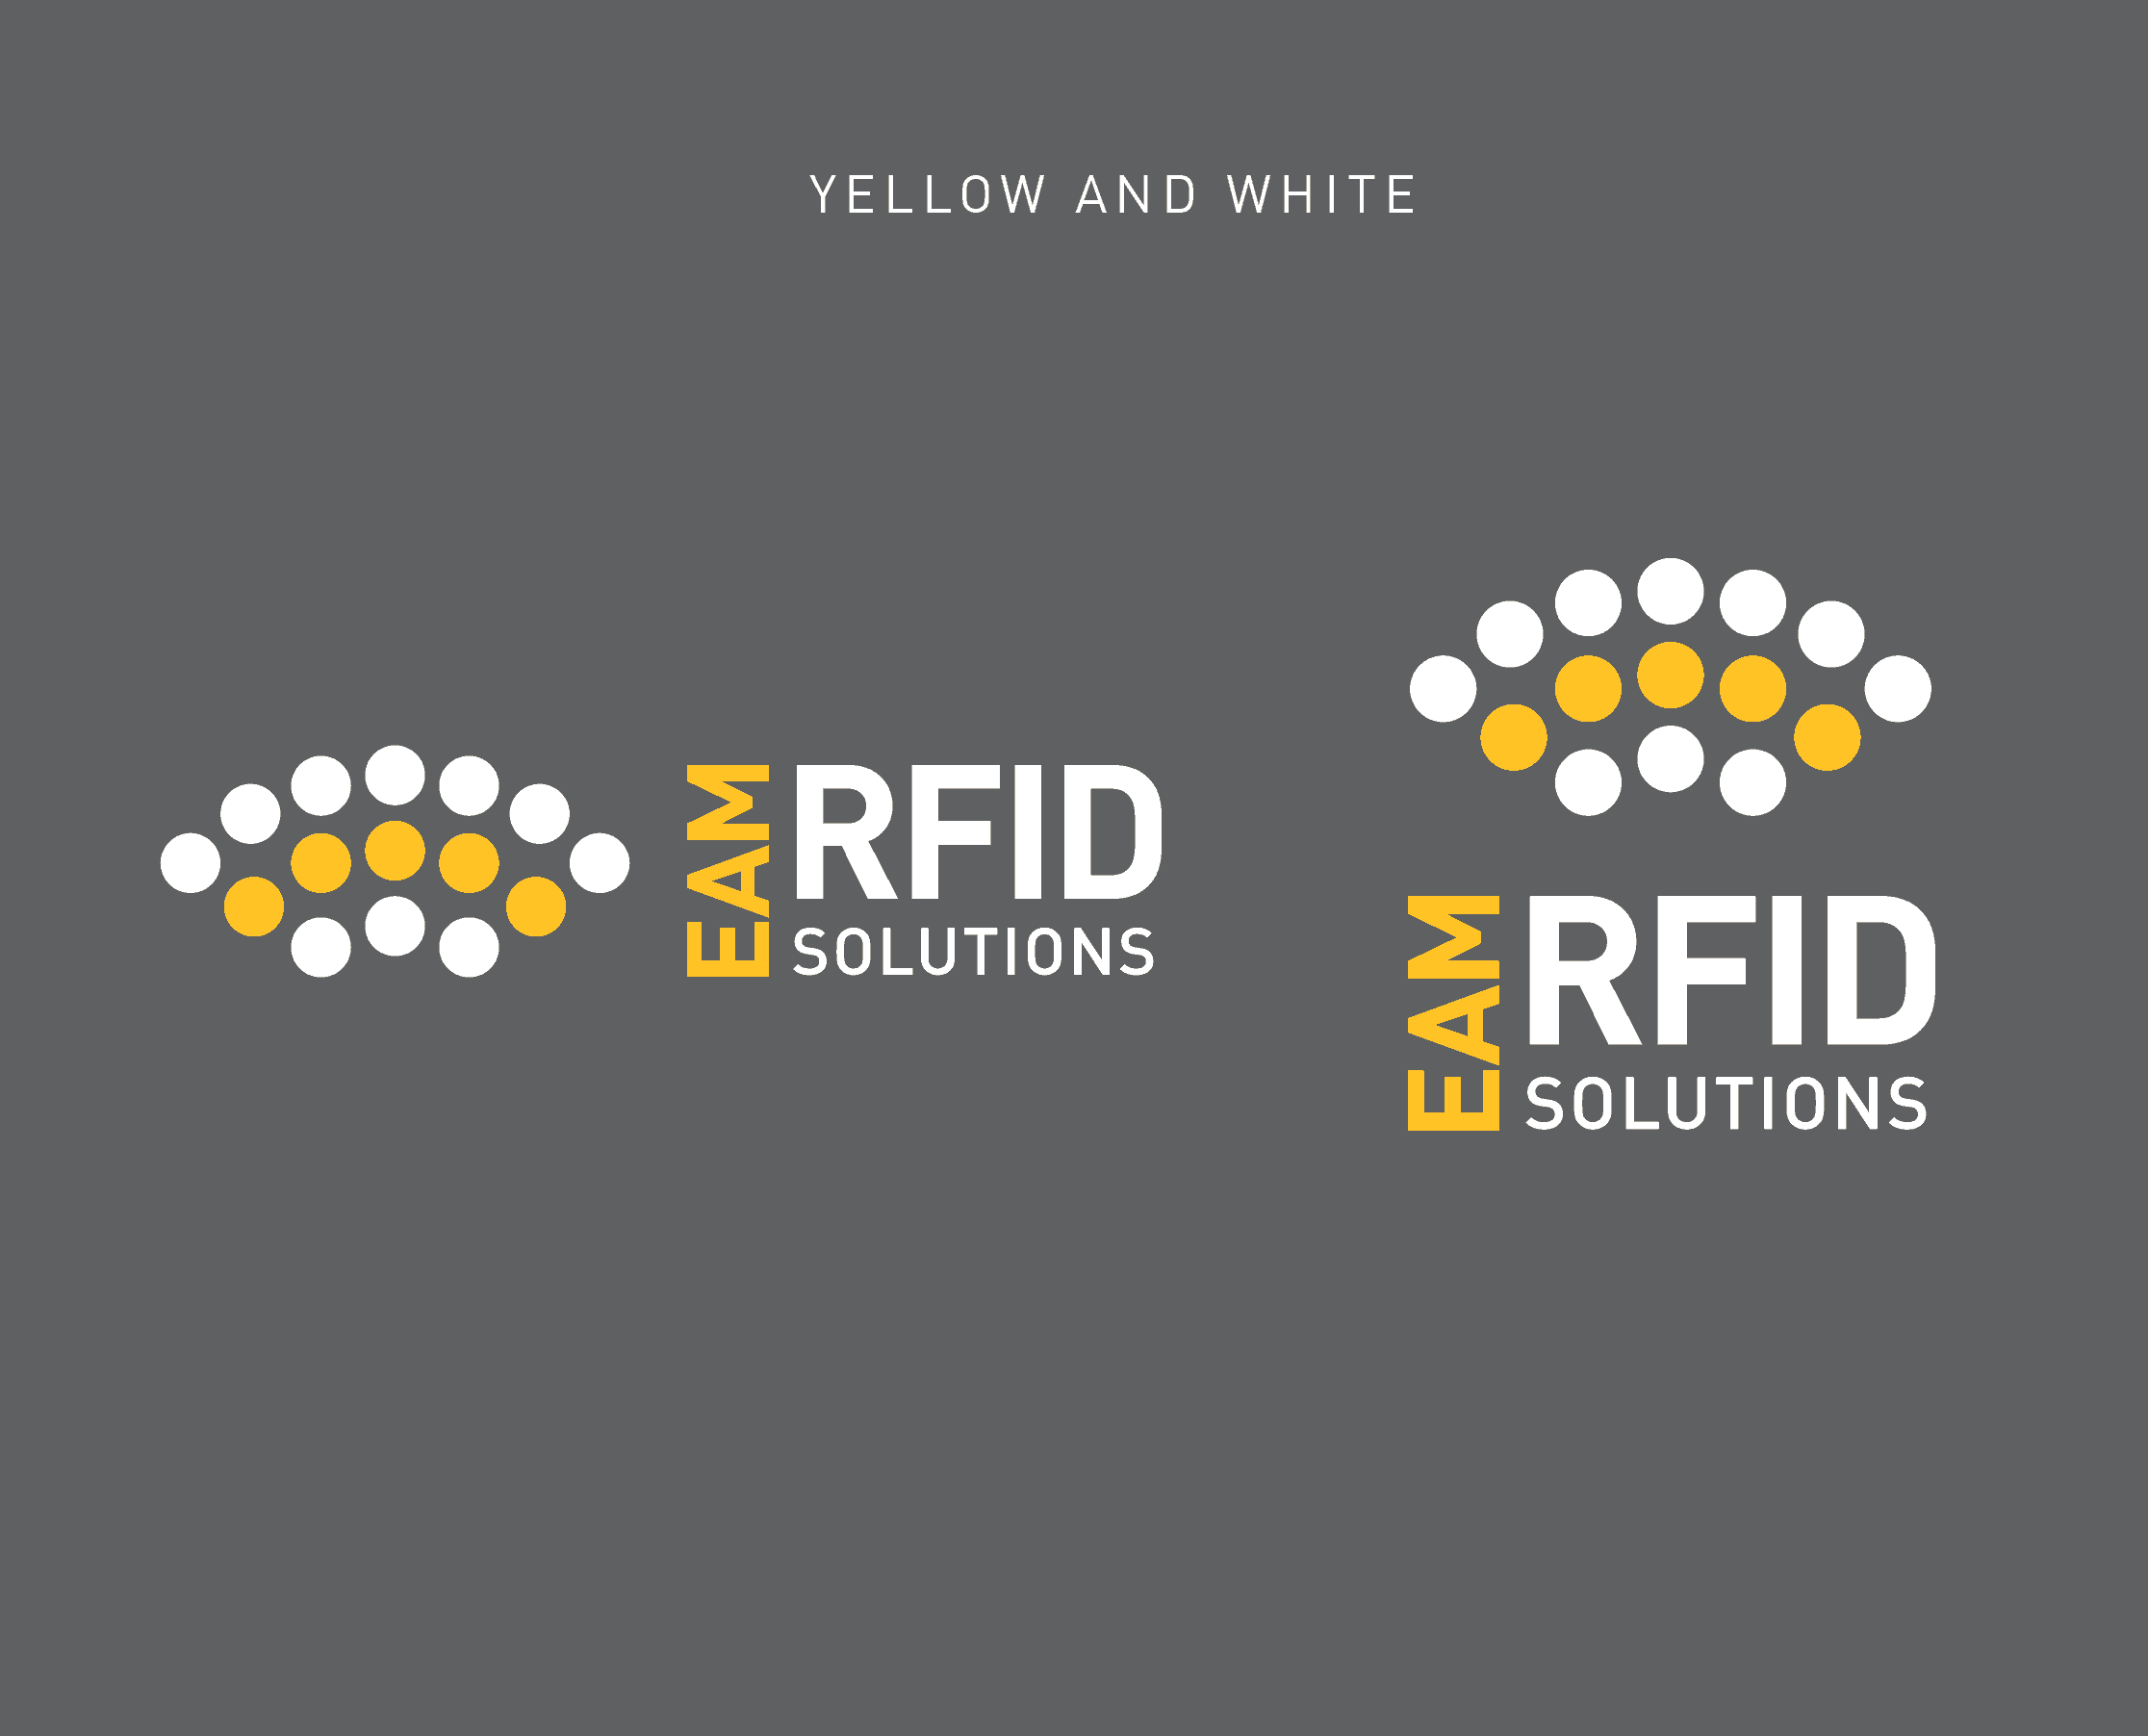 EAM RFID primary logo usage on grey background